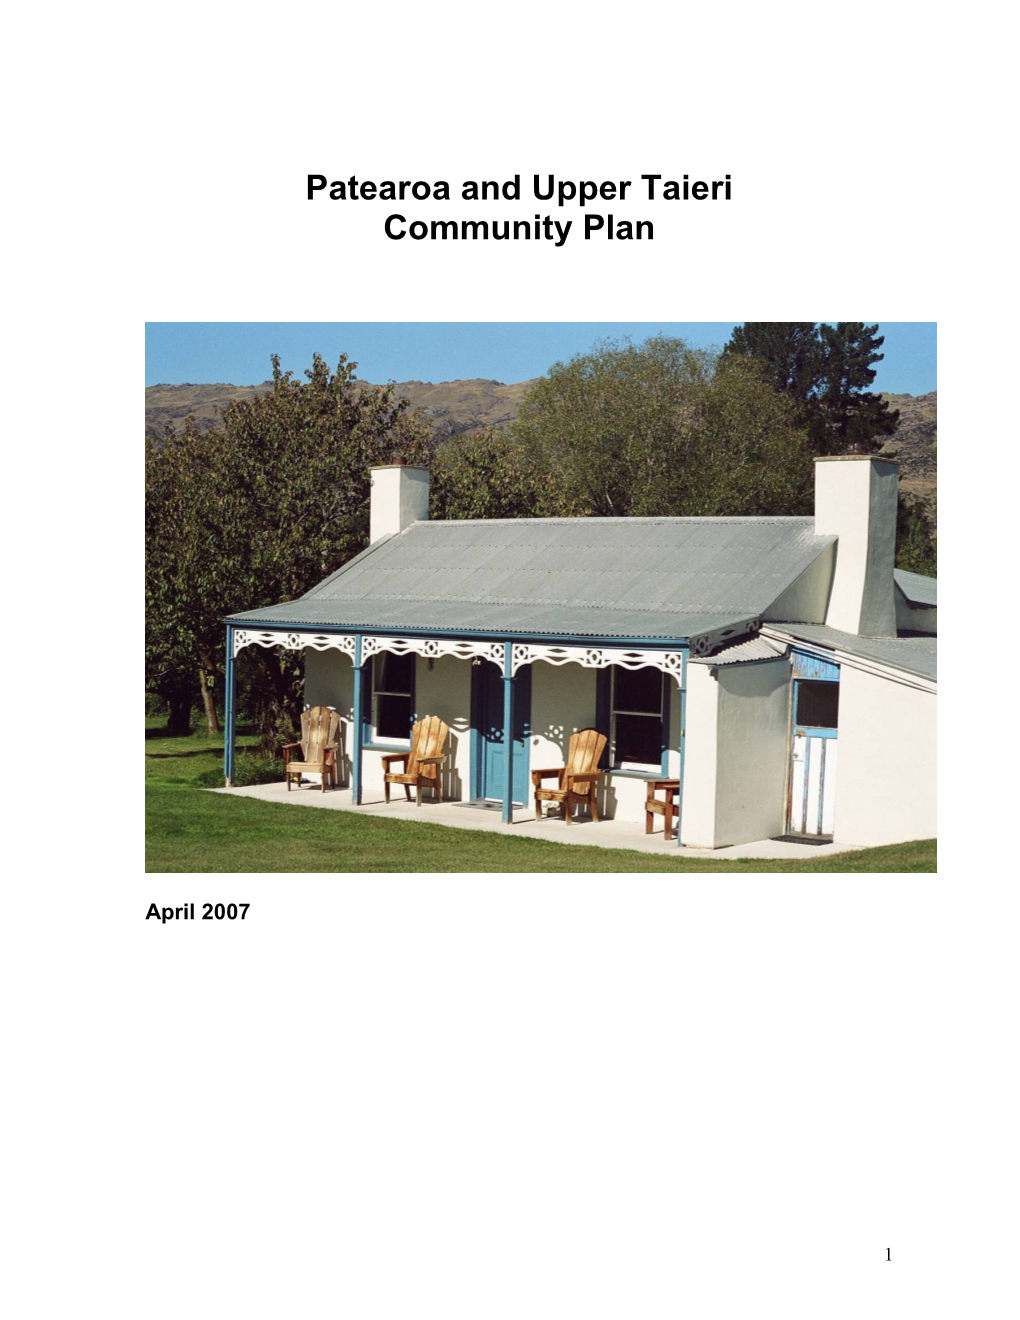 Patearoa and Upper Taieri Community Plan